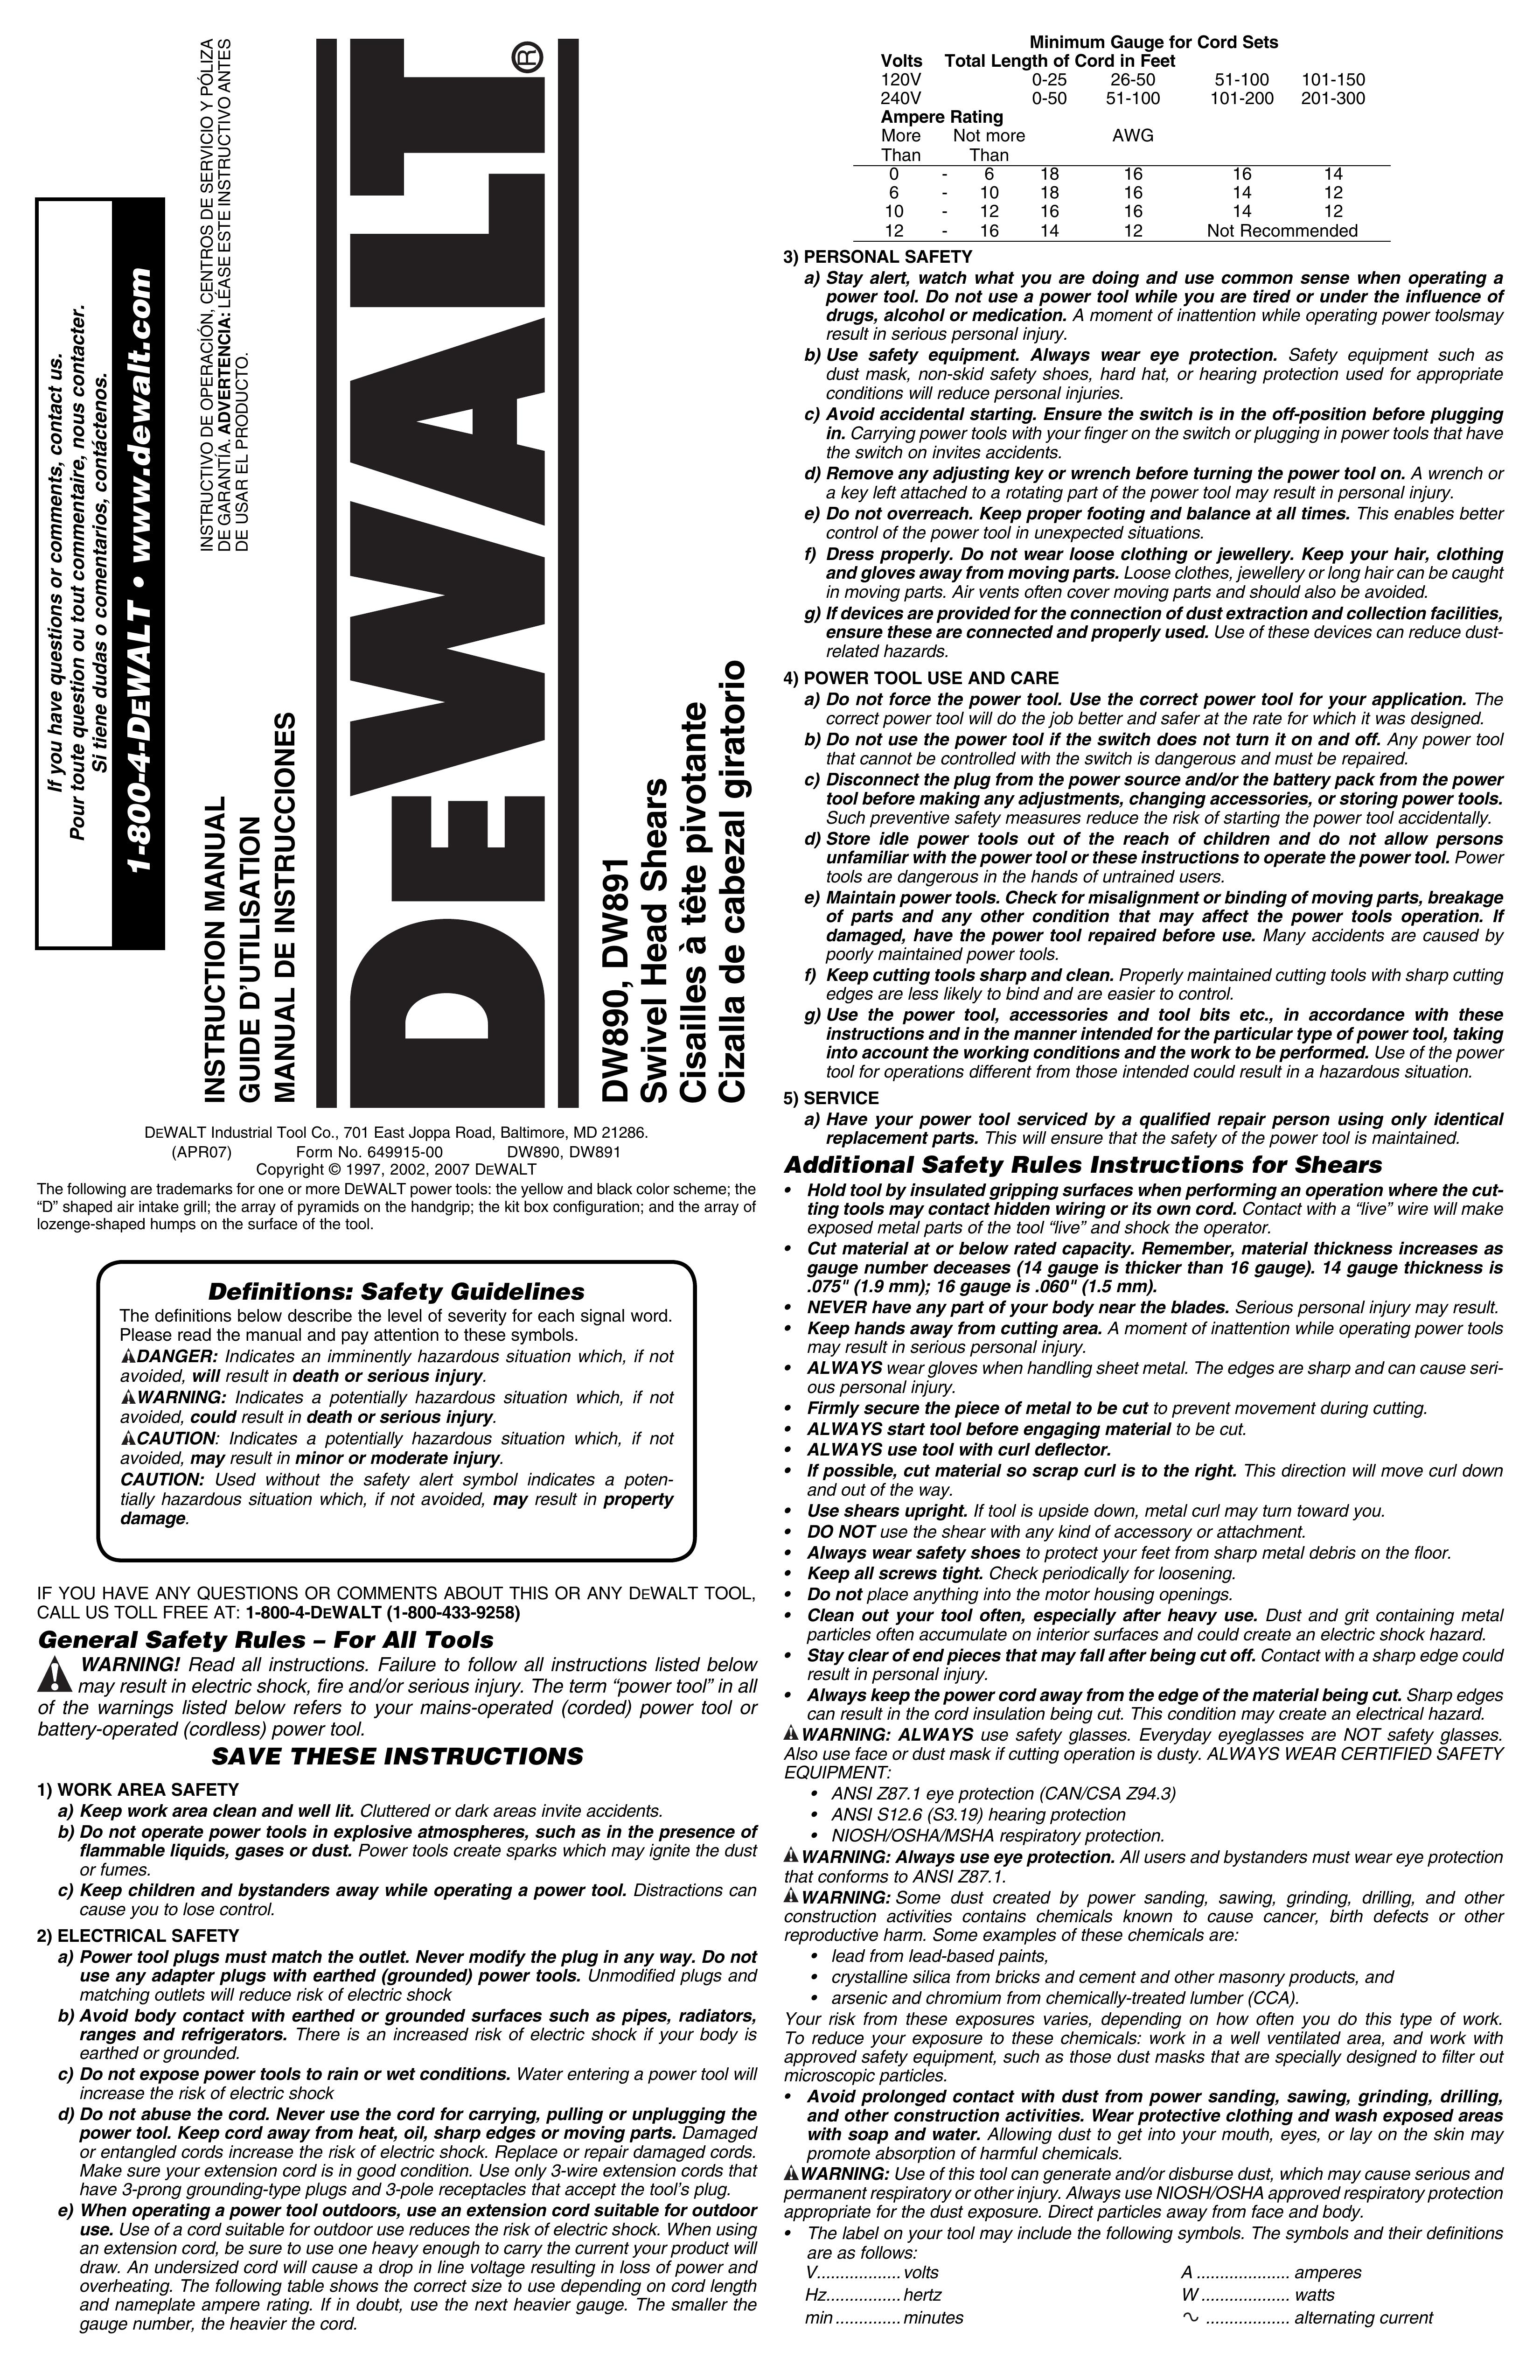 DeWalt DW891 Trimmer User Manual